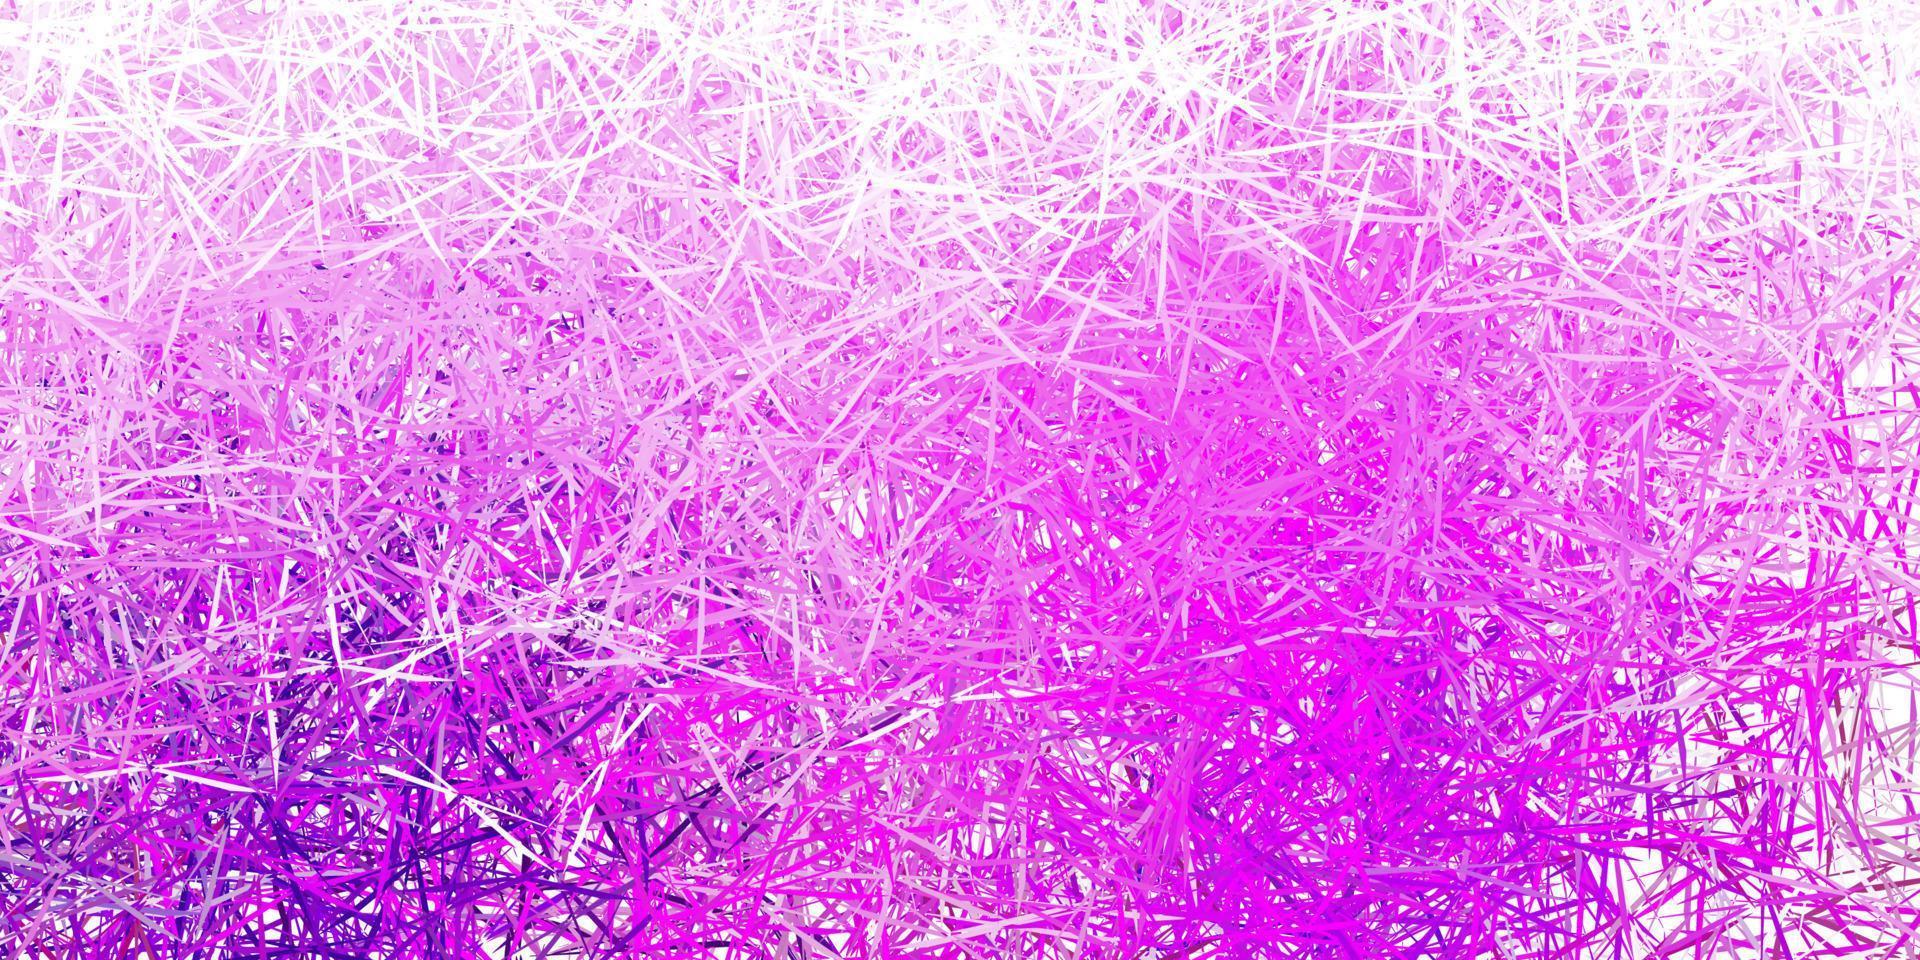 sfondo vettoriale viola chiaro con forme poligonali.